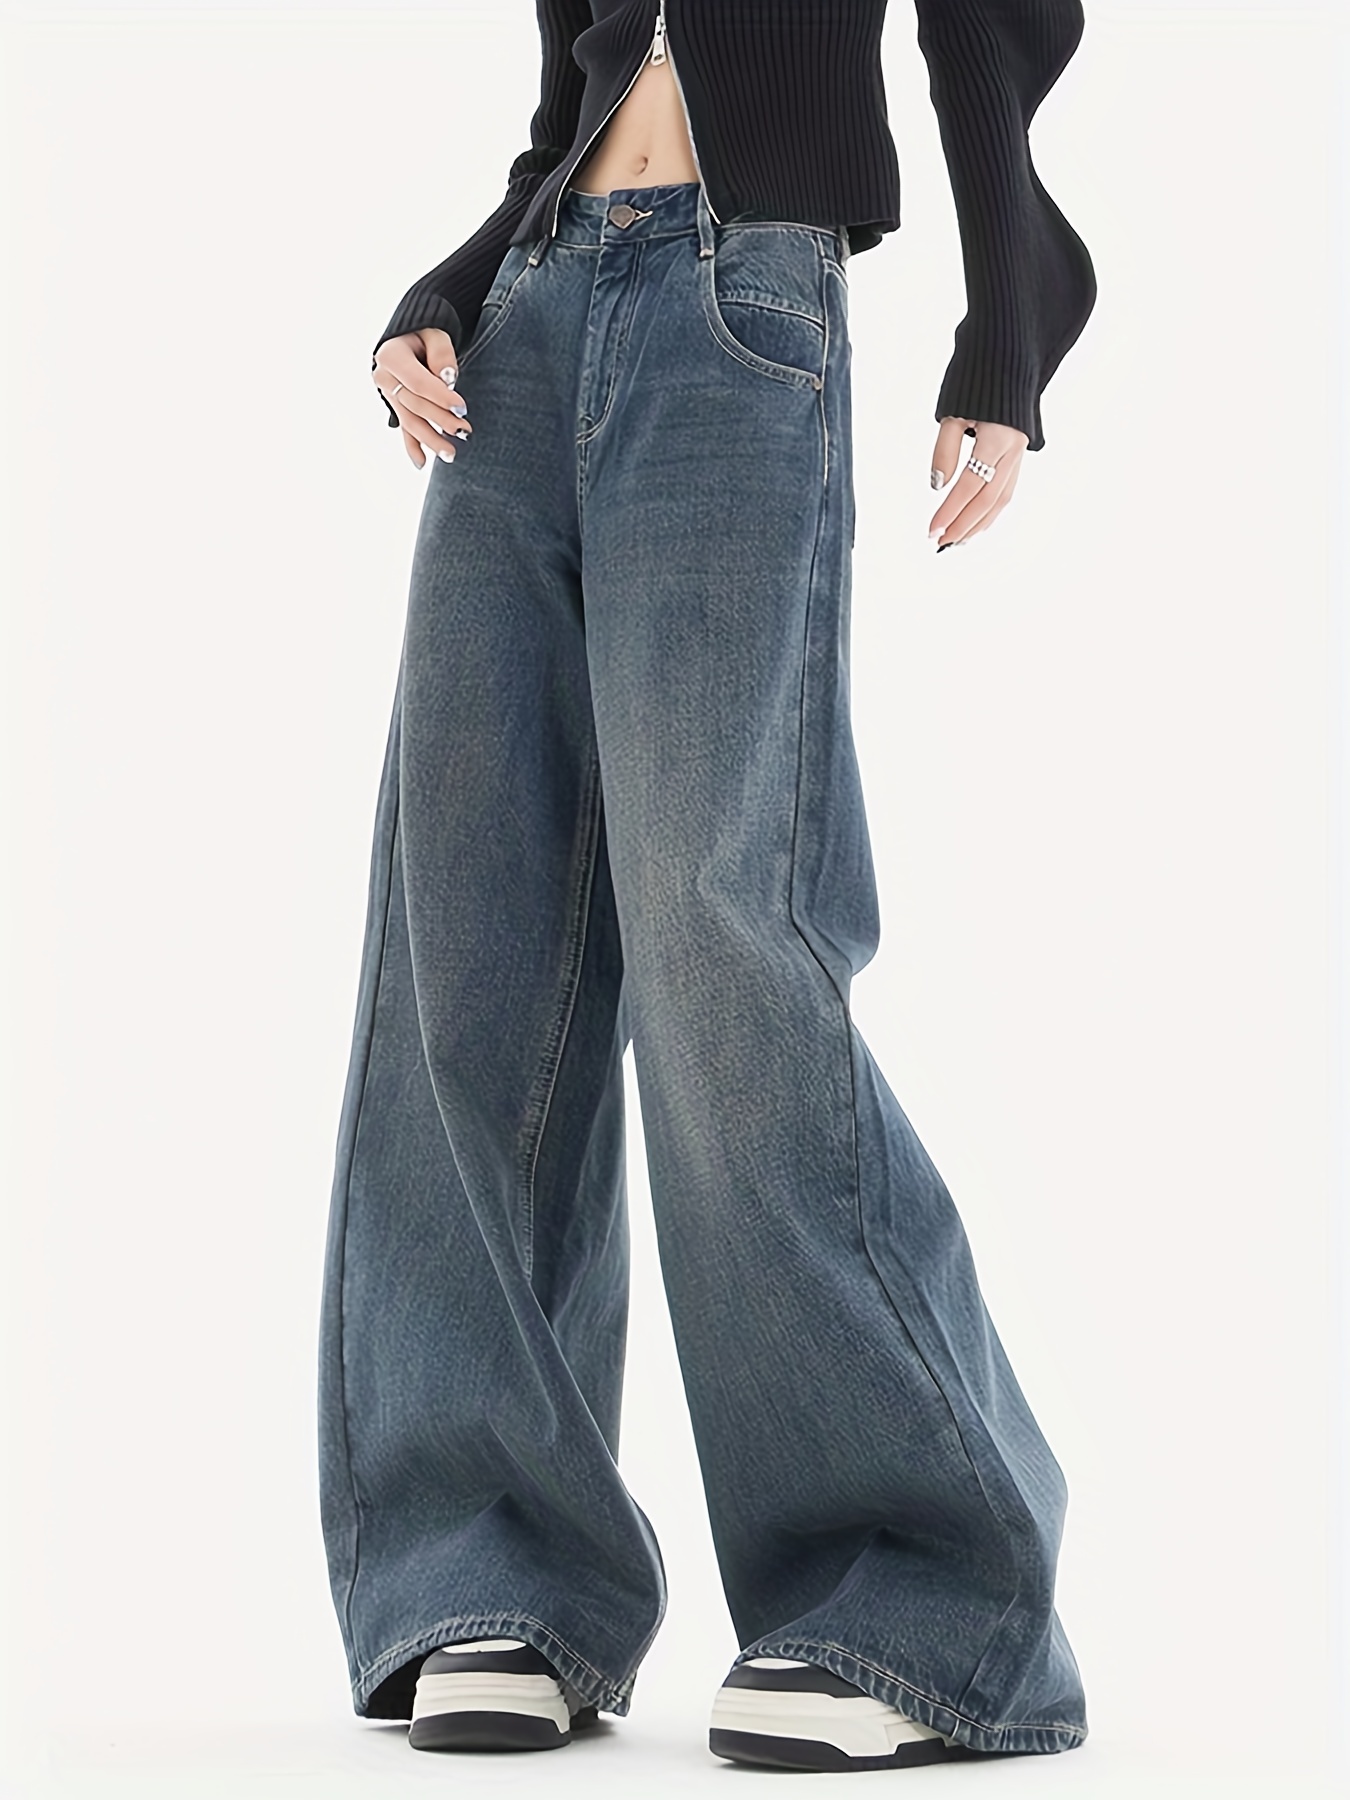 Zara Loose High Waist Hole Jeans - Grunge Clothing Store